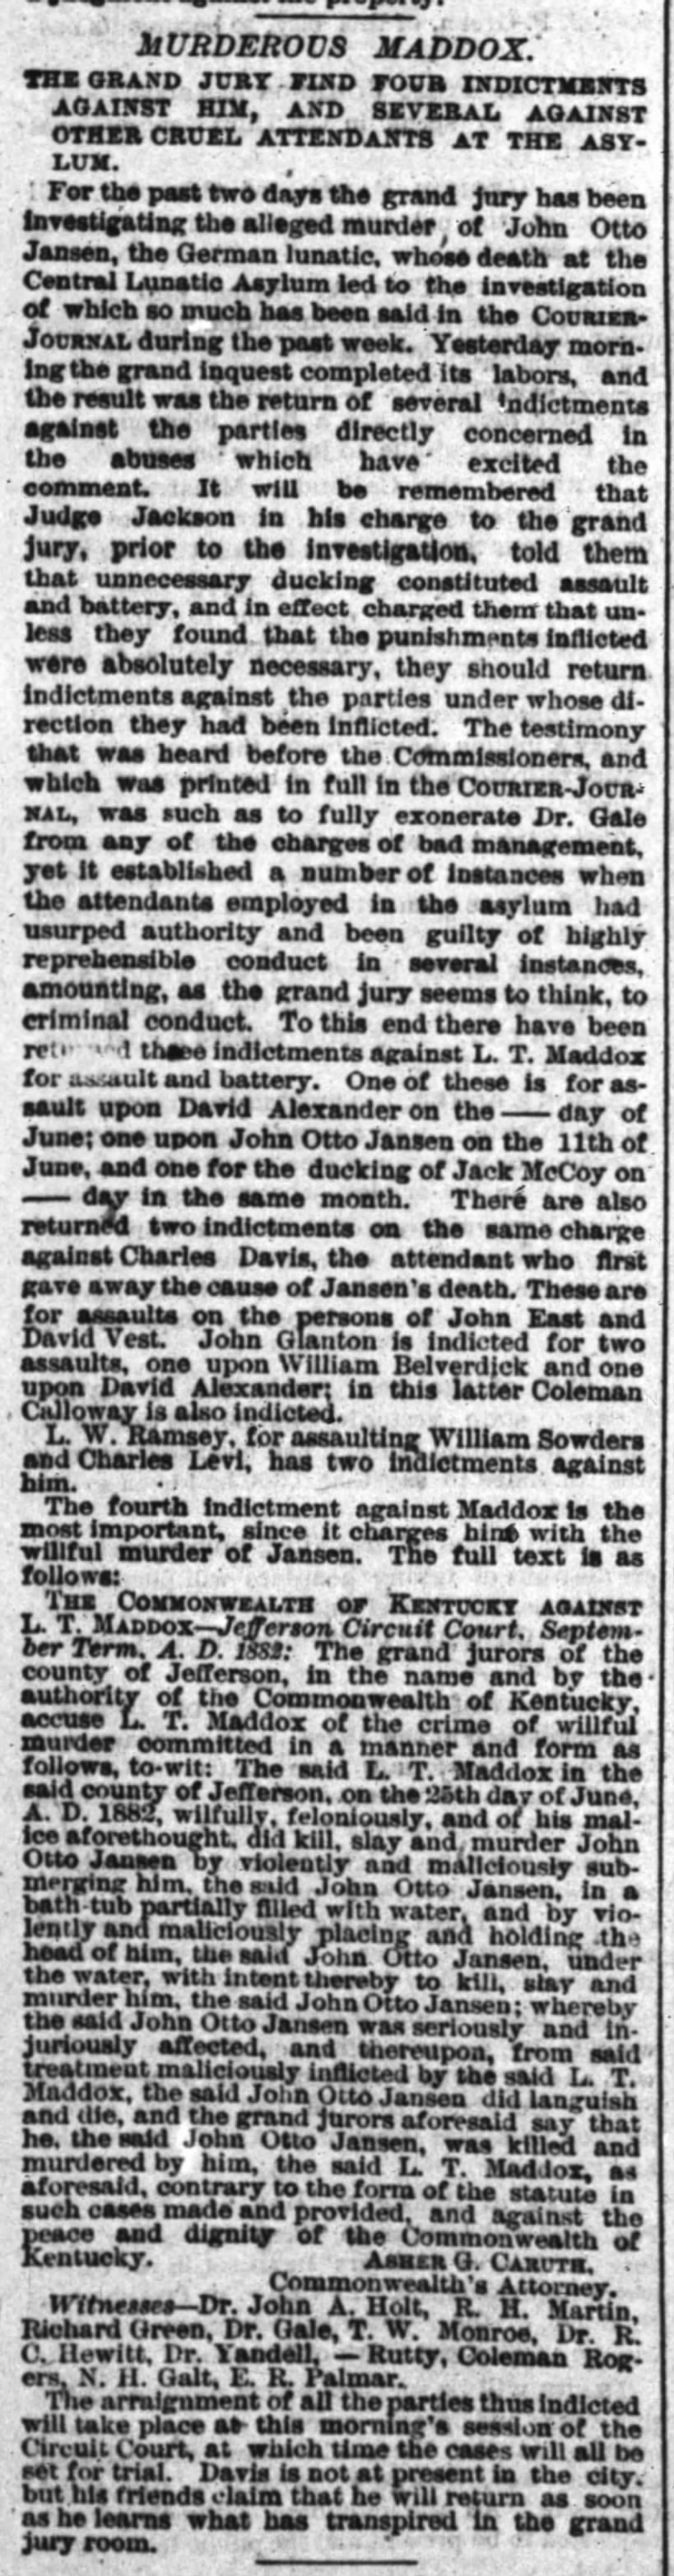 Murderous Maddox, The Courier-Journal (Louisville, Kentucky) September 28, 1882, page 5